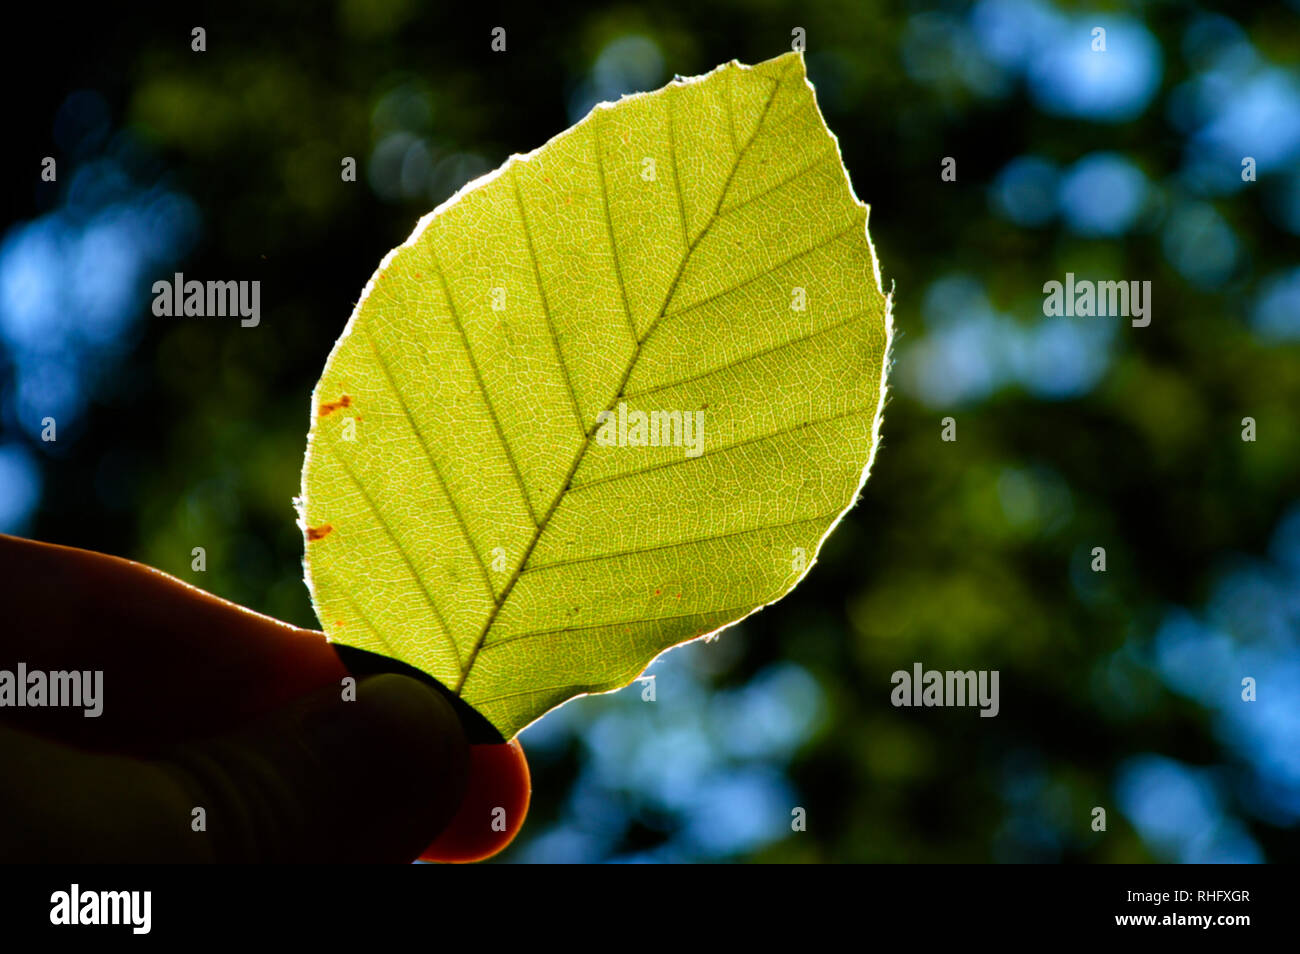 Sunlight shines through a green leaf Stock Photo